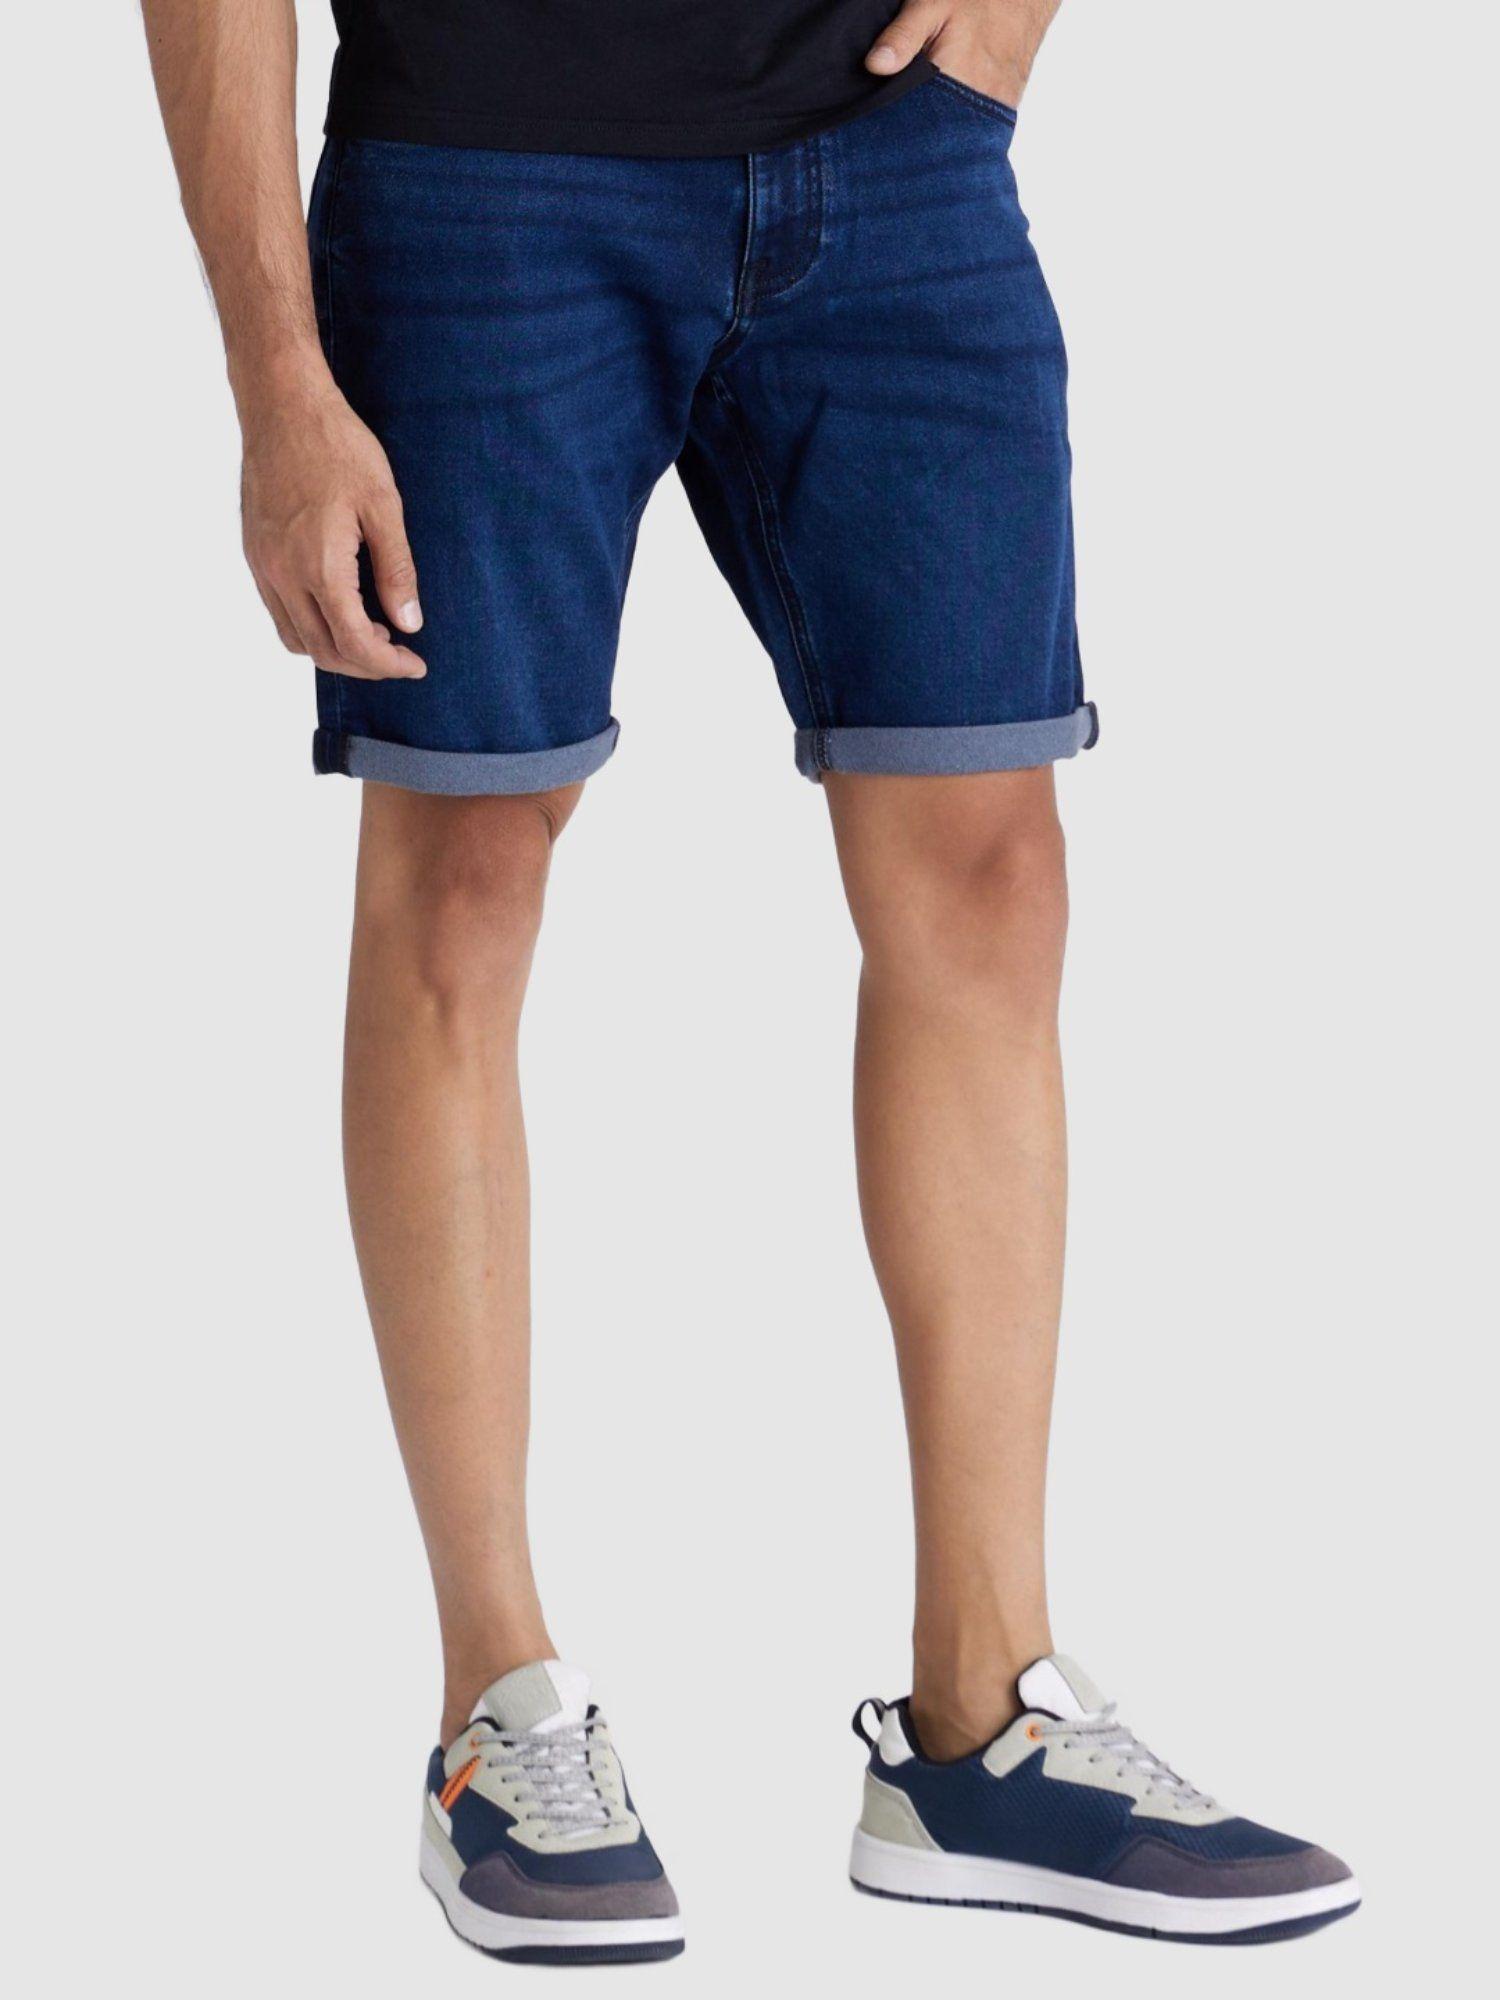 men-solid-blue-shorts